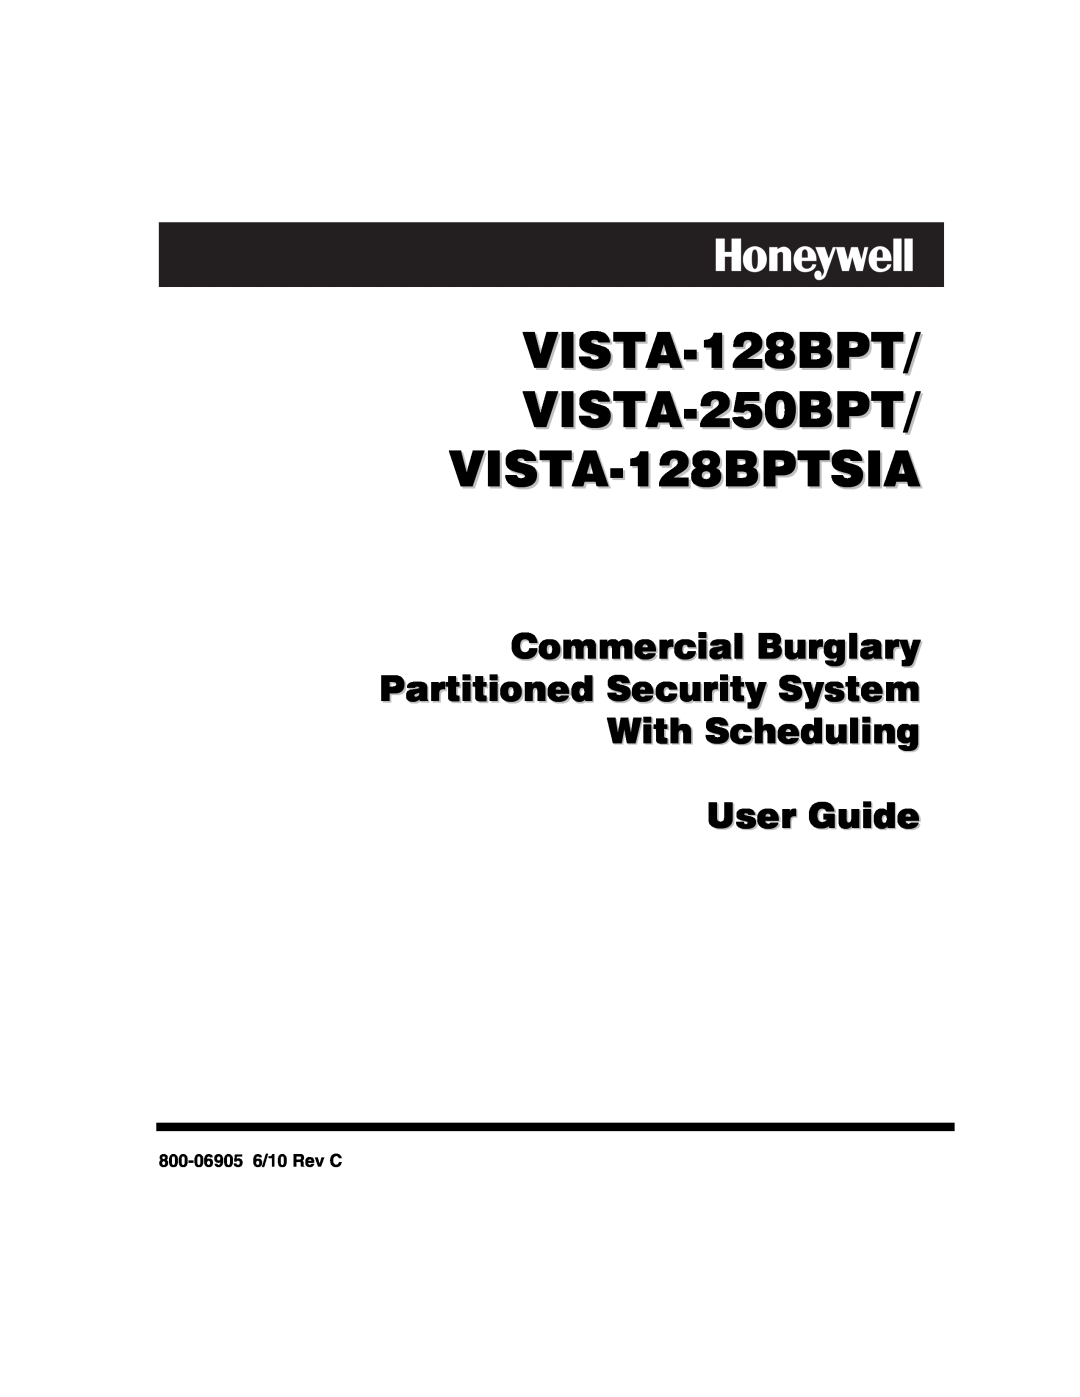 Honeywell VISTA128BPT manual VISTA-128BPT VISTA-250BPT VISTA-128BPTSIA, Commercial Burglary Partitioned Security System 